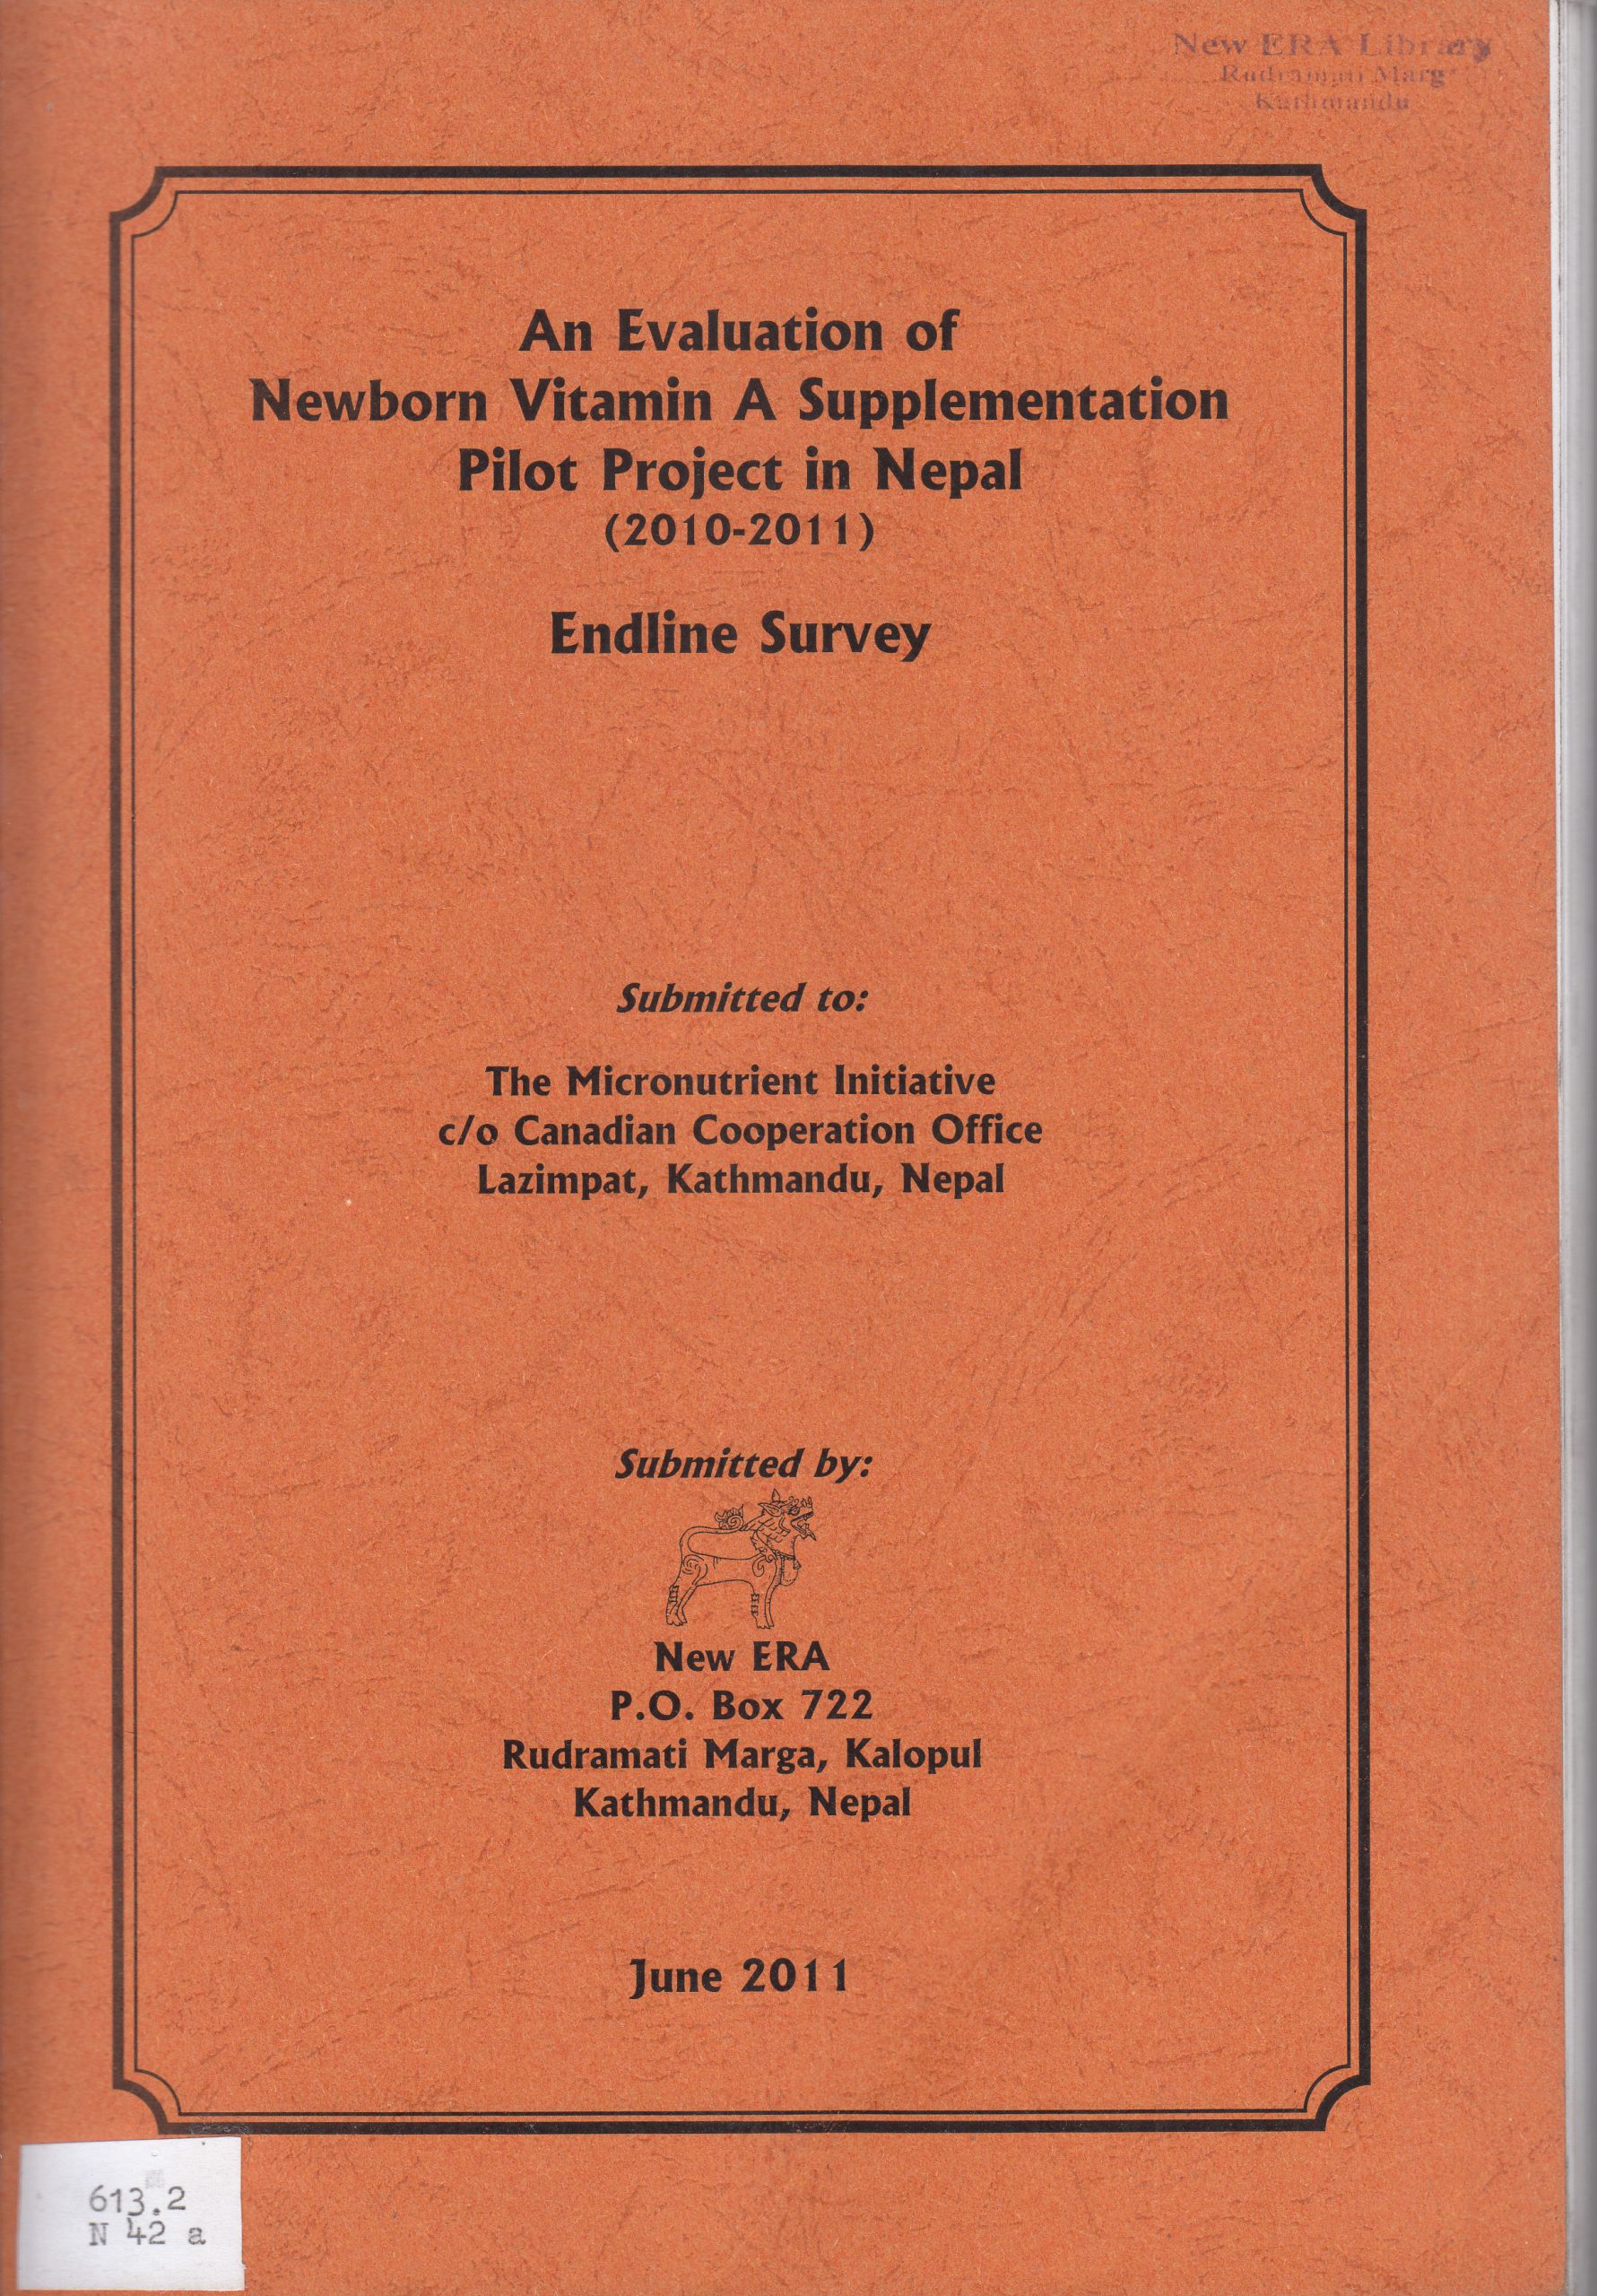 An Evaluation of Newborn Vitamin A Supplementation Pilot Project in Nepal (2010-2011) – Endline Survey